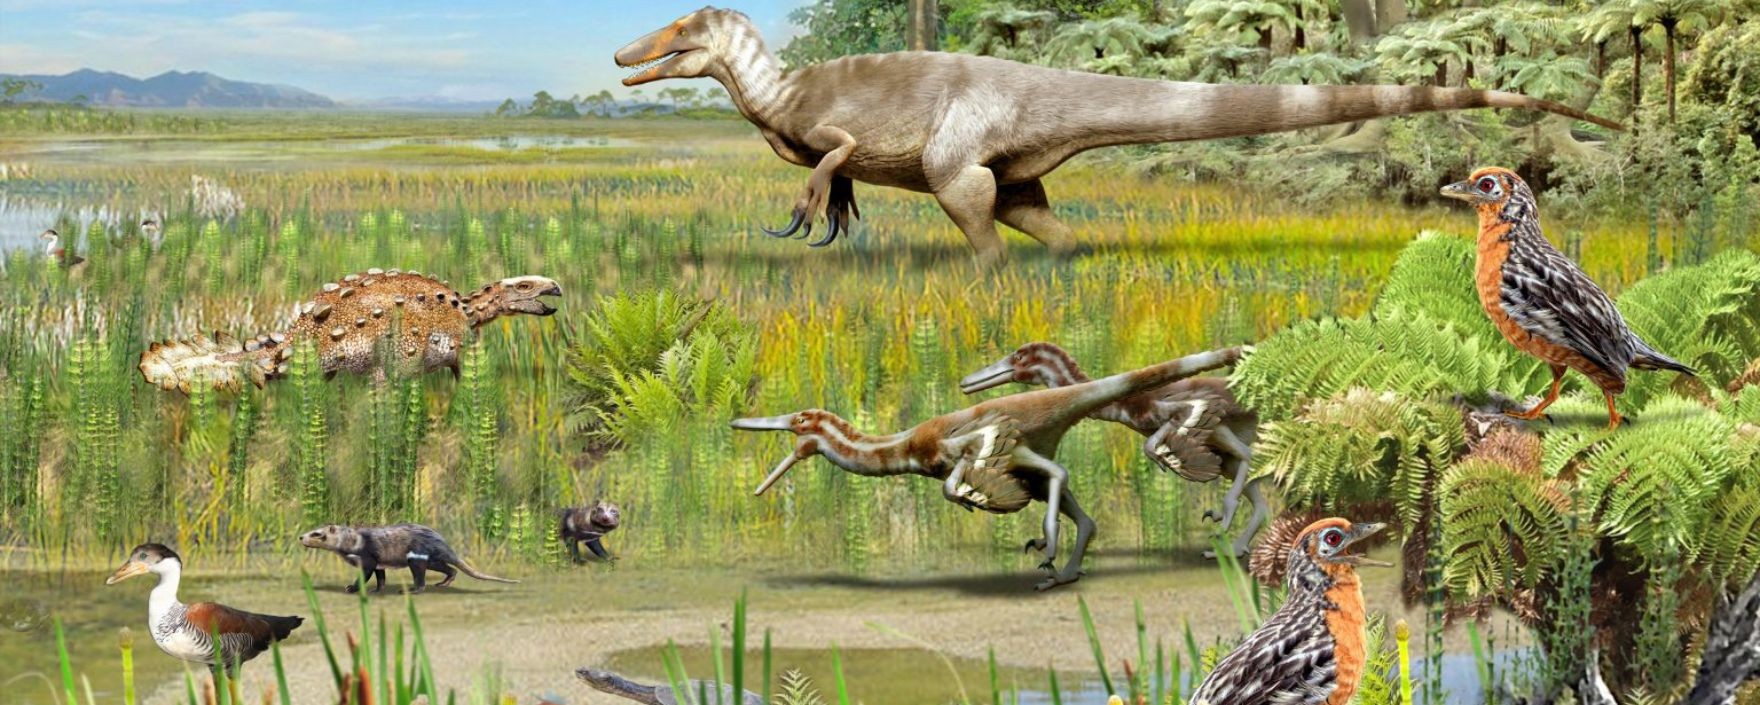 Digital rendition of dinosaurs